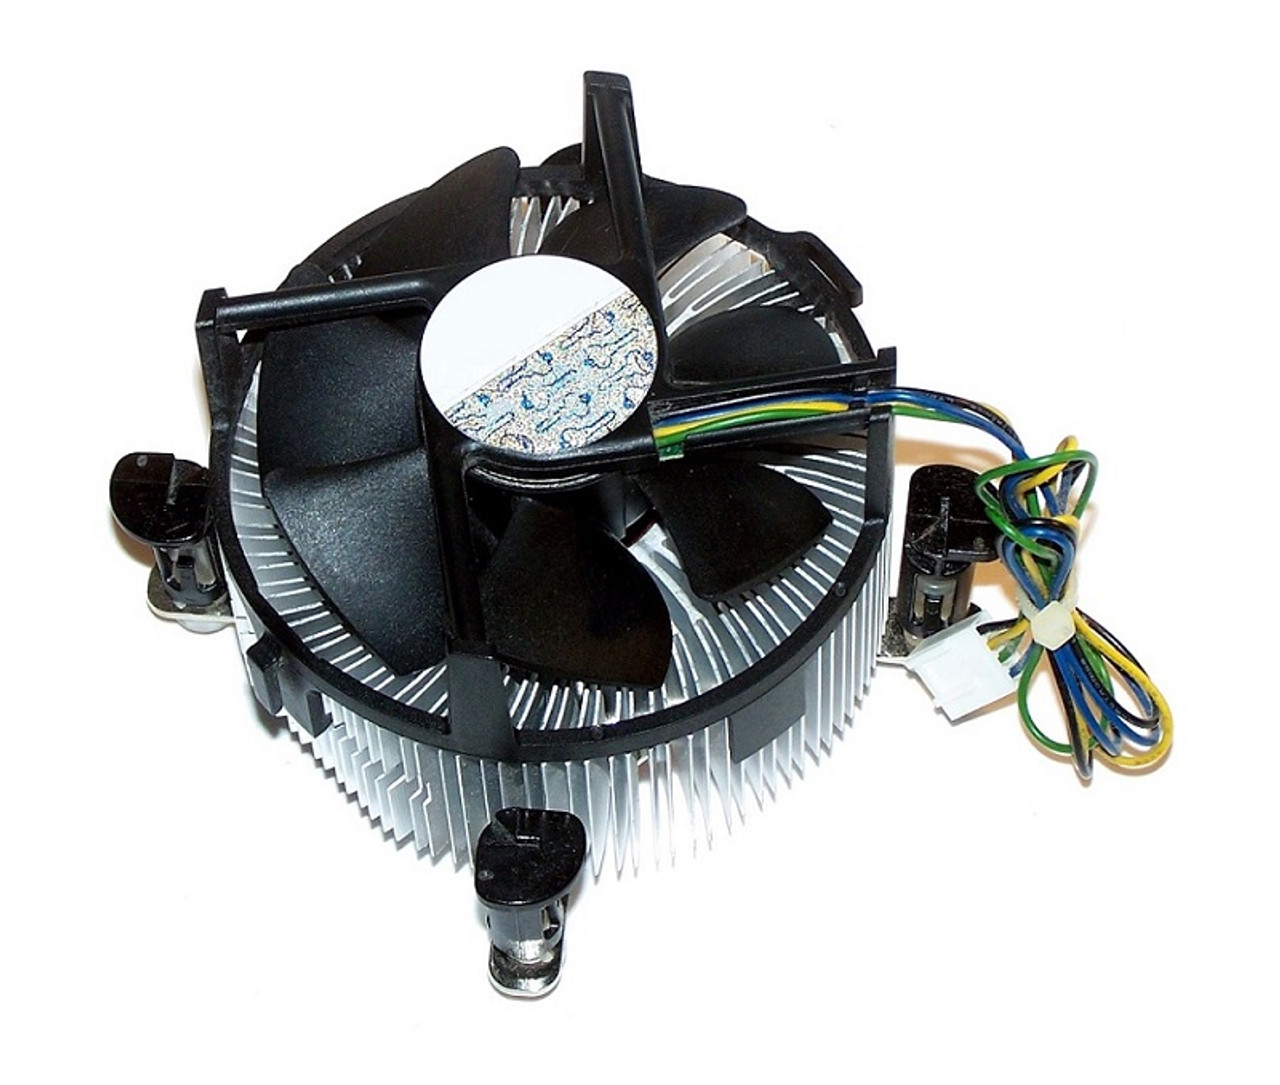 0A86483 - IBM Heatsink/Fan COOLER Assembly for ThinkStation D30 WorkStation